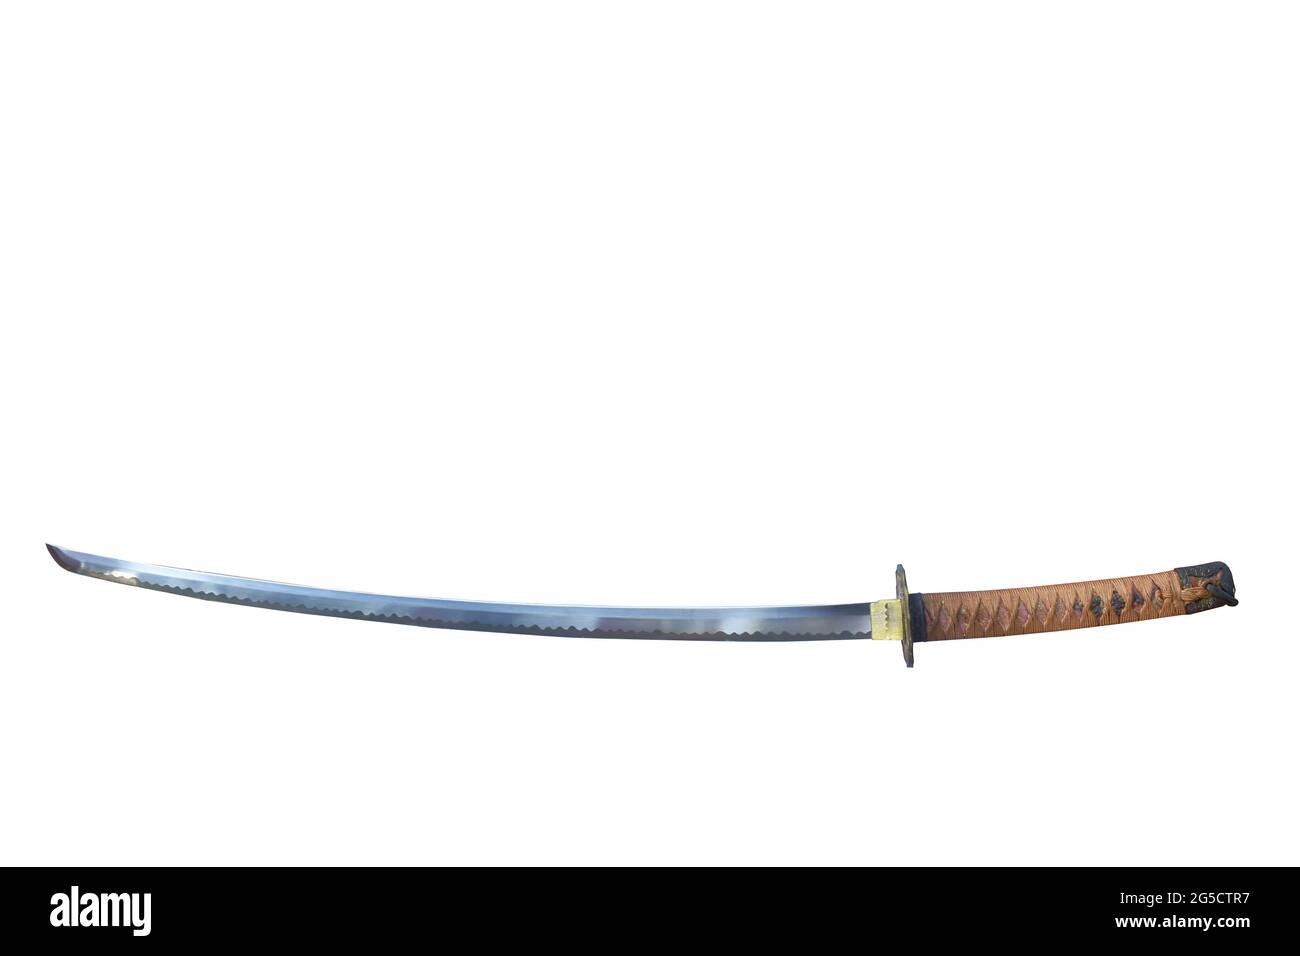 Japanese samurai sword blade or katana on white background Stock Photo -  Alamy